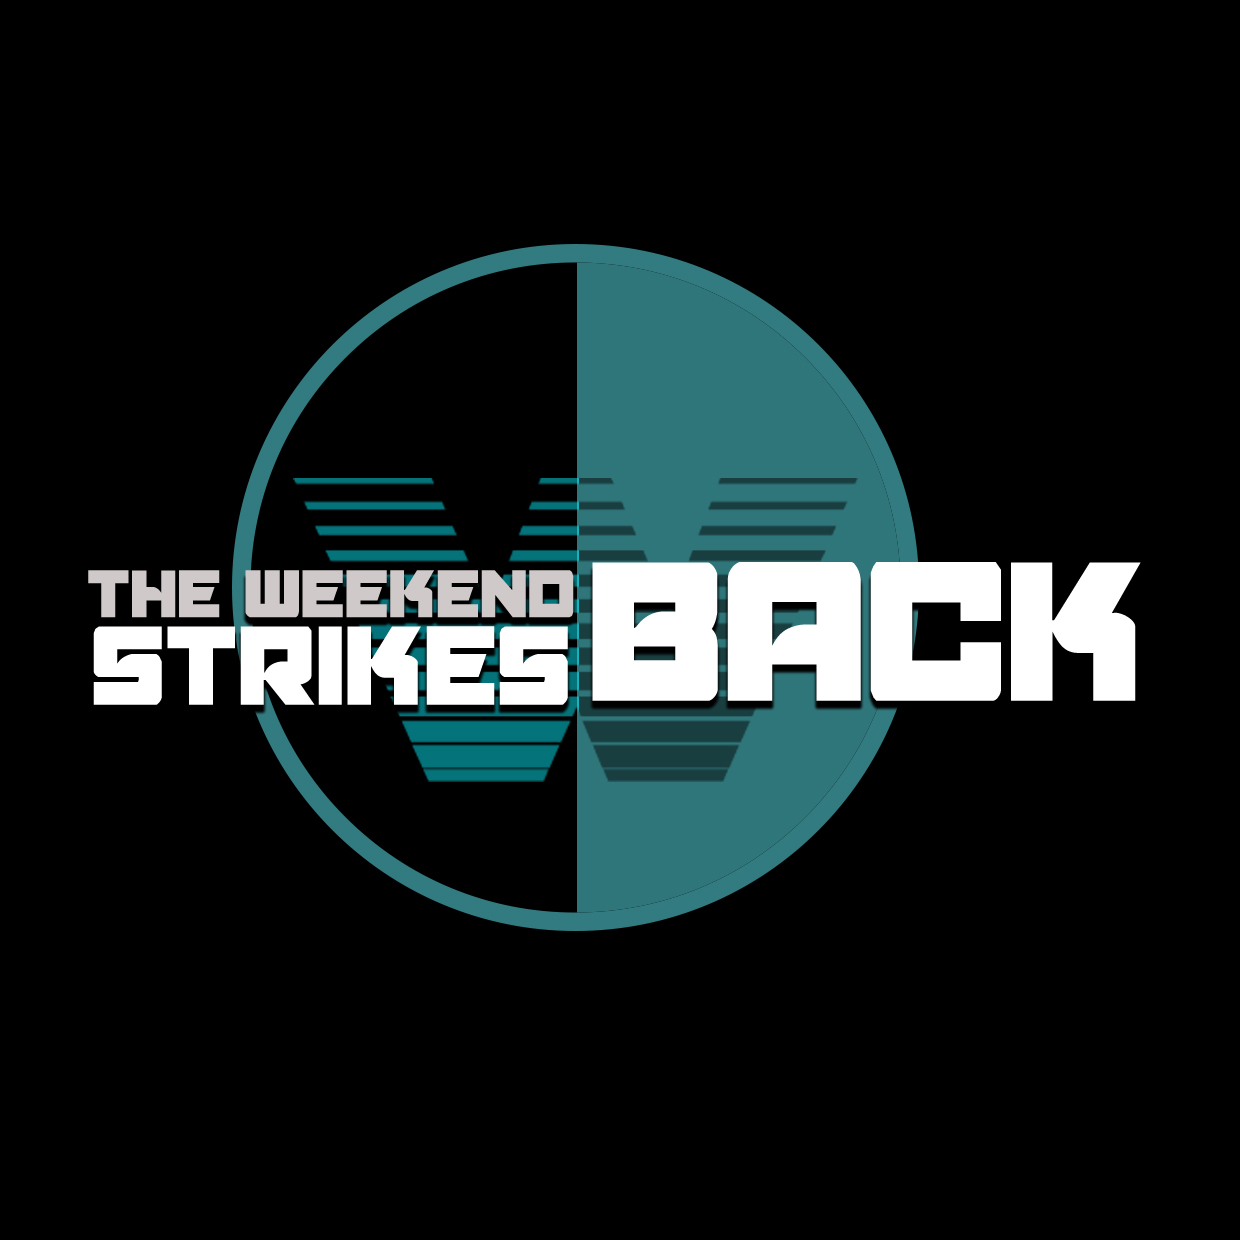 The Weekend Strikes Back logo